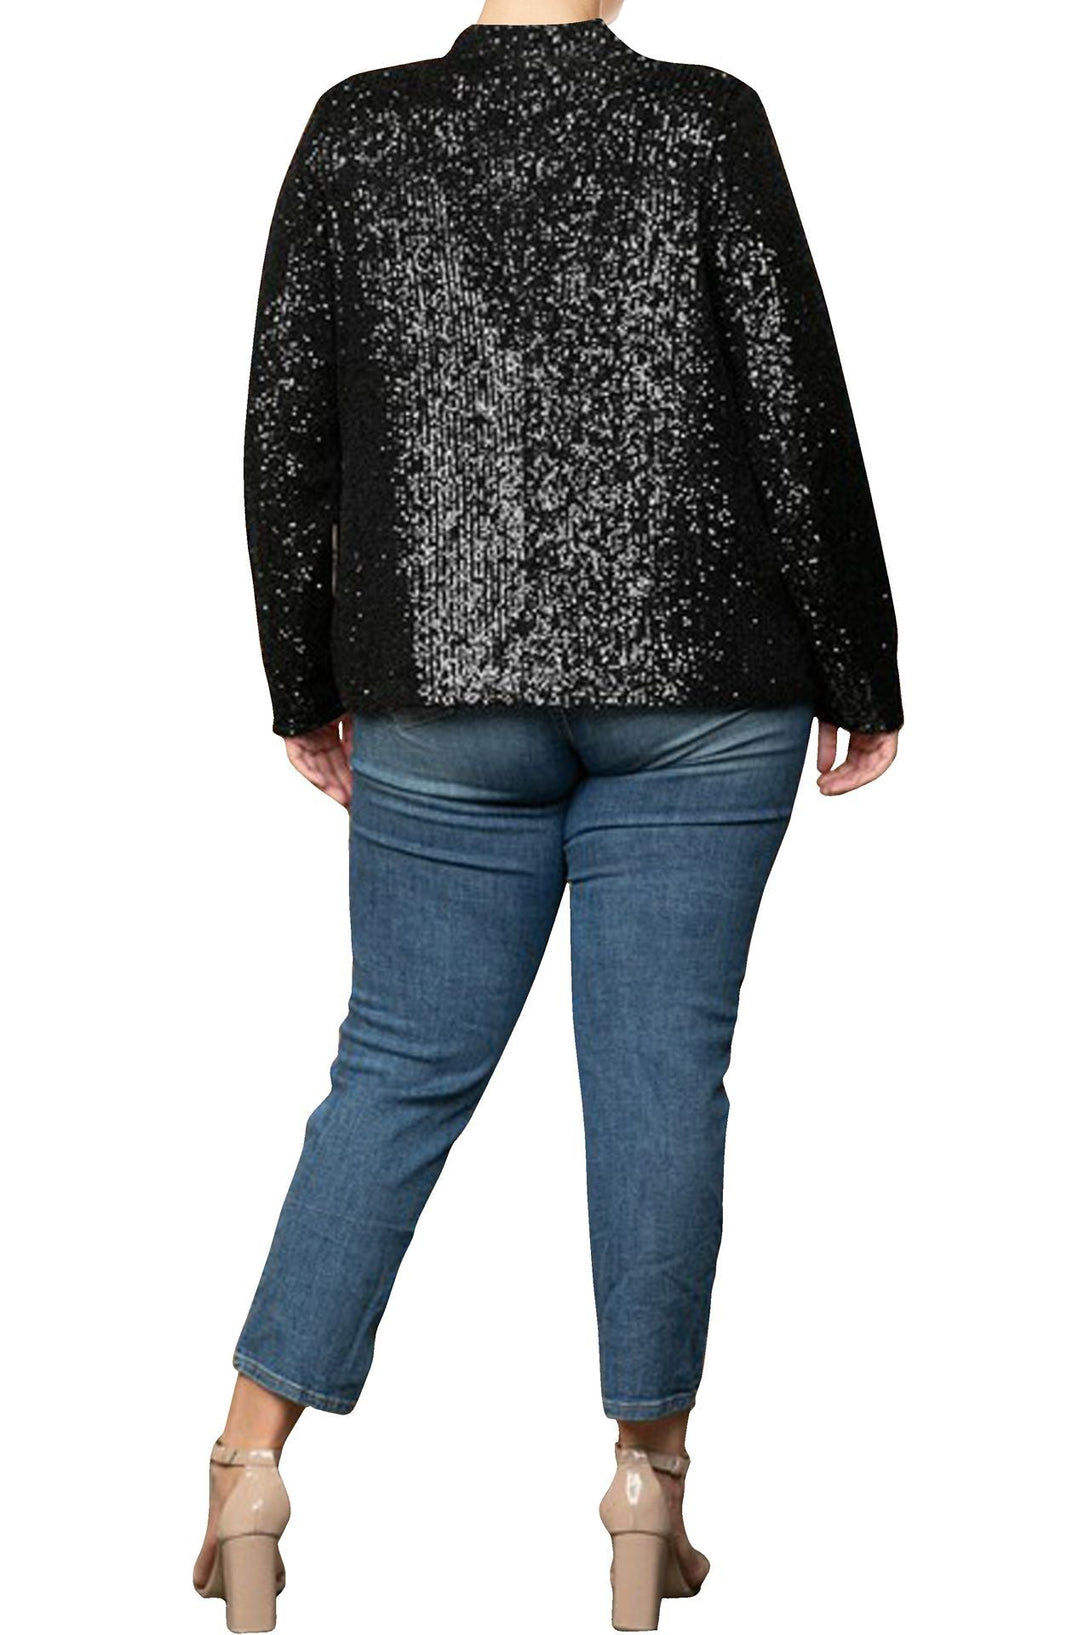 "Shahida Parides" "womens black sequin blazer" "sequin blazer jacket" "sequin jacket women's plus size"